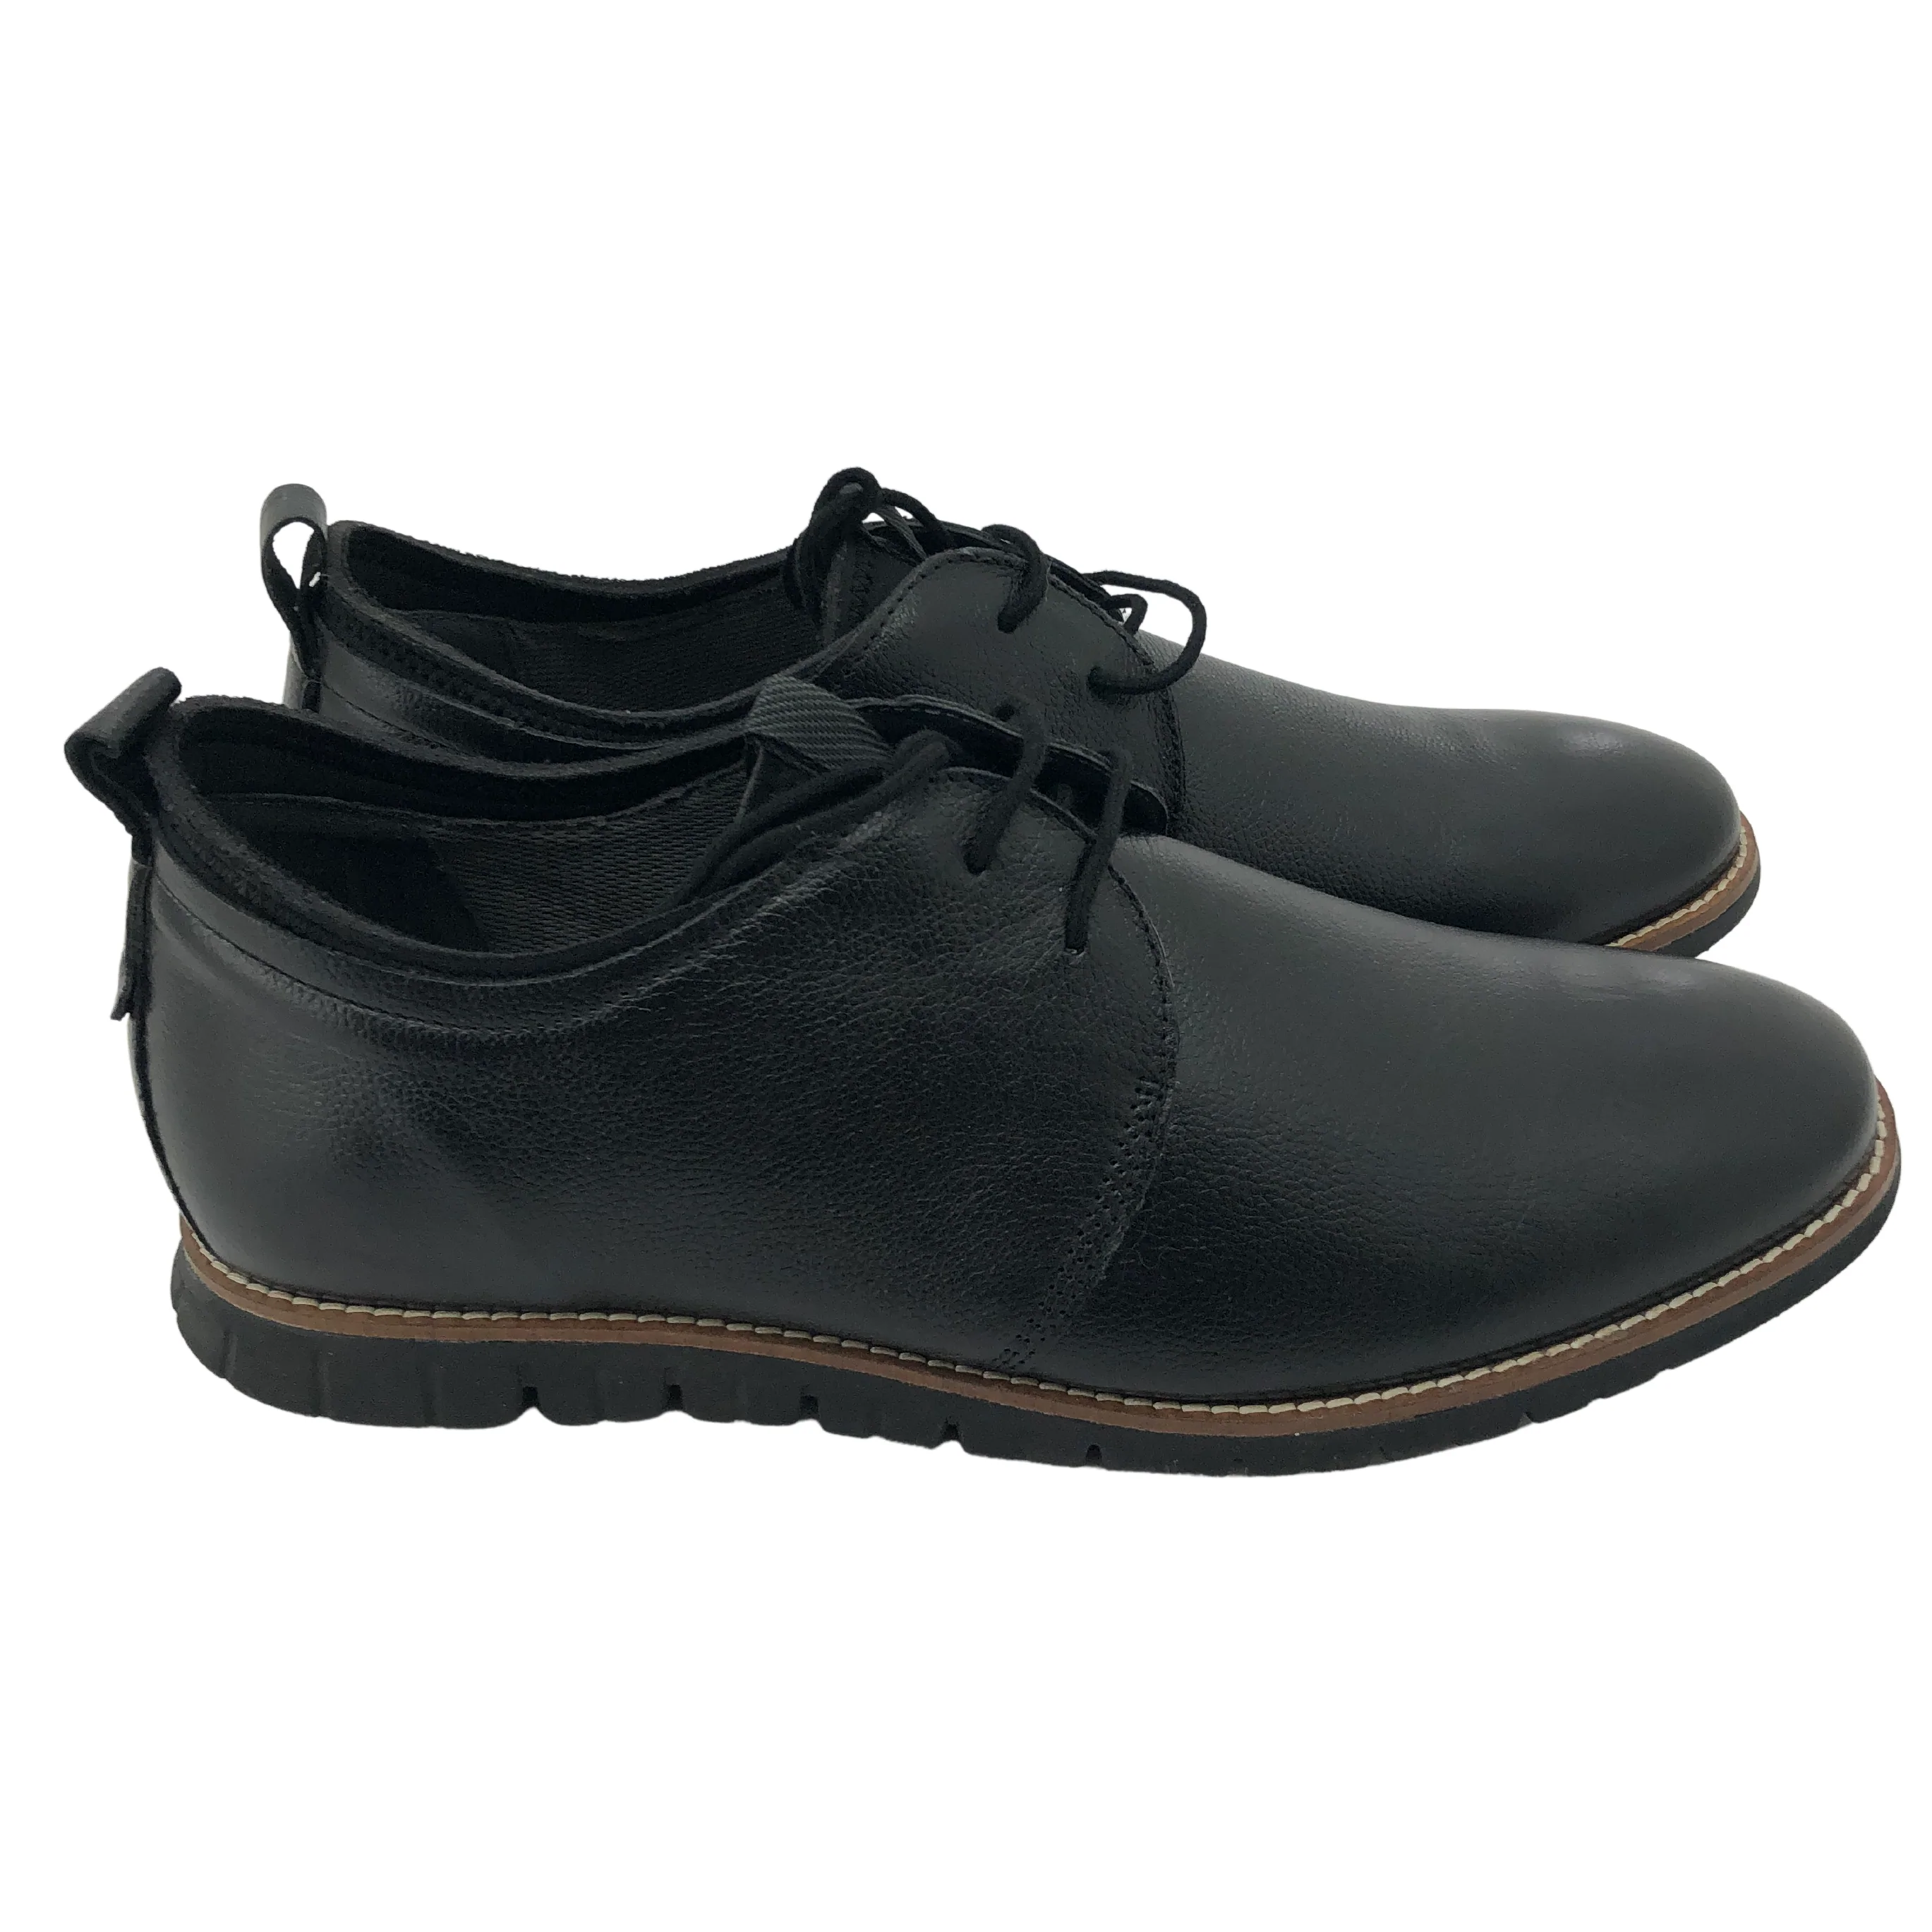 Hush Puppies Men's Dress Shoe / Oxford / Black / Size 13